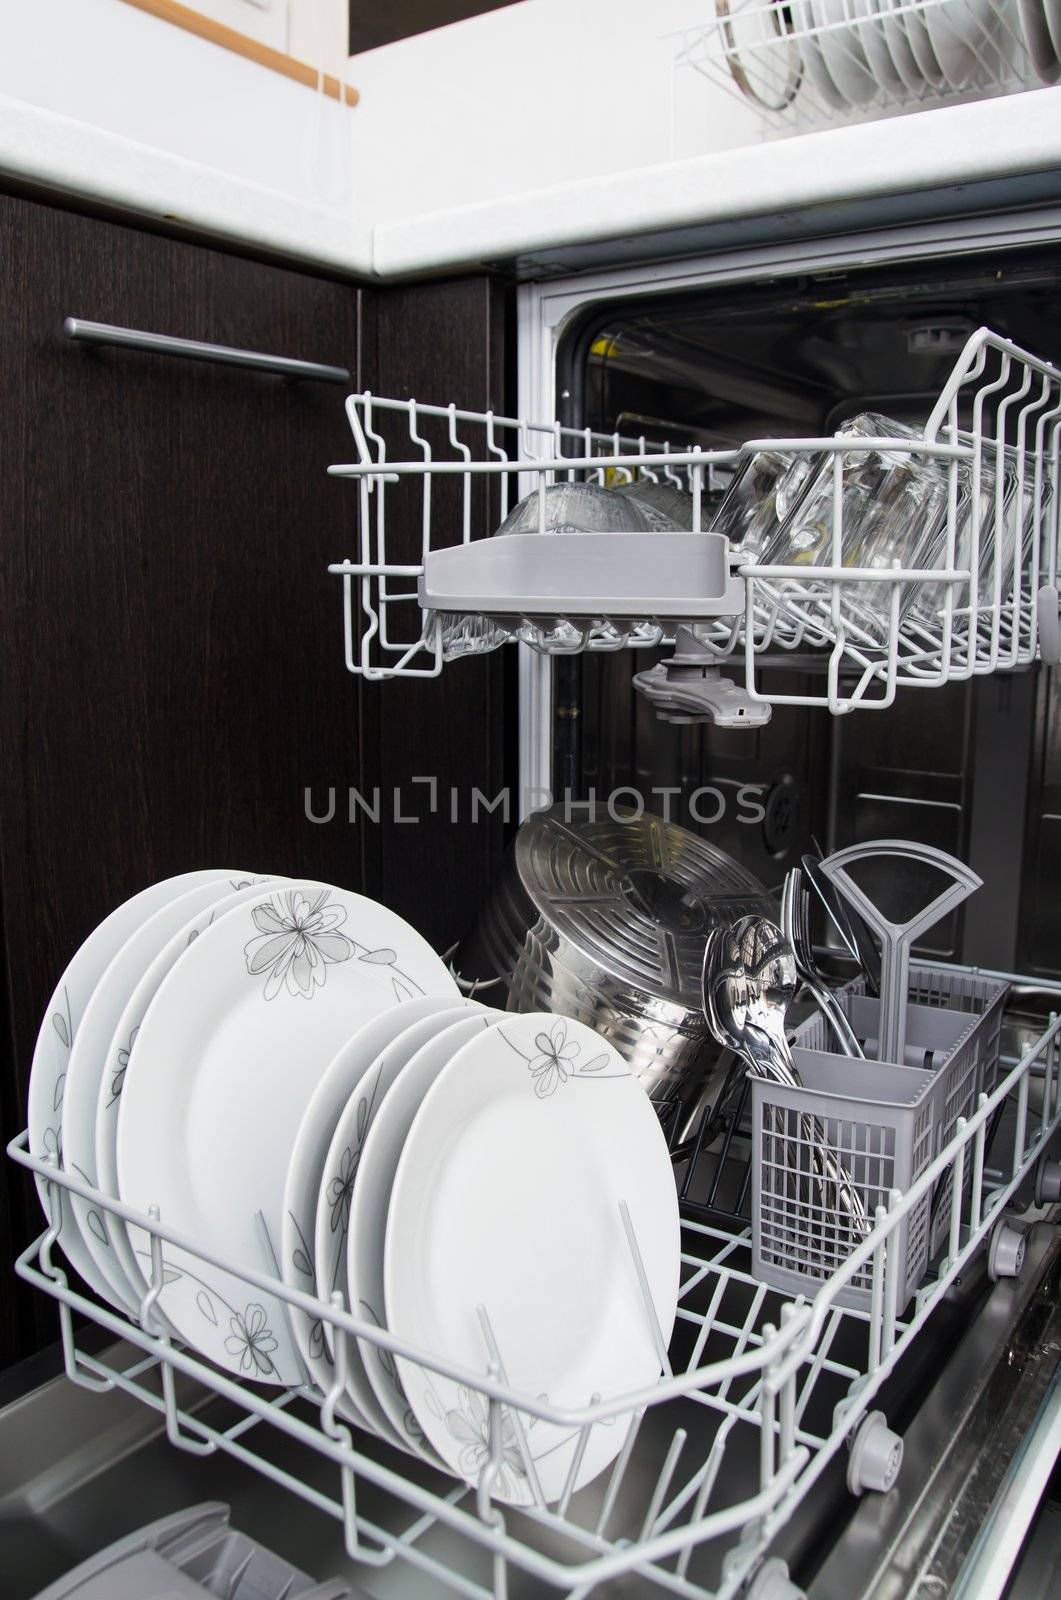 Dishwasher with white plates